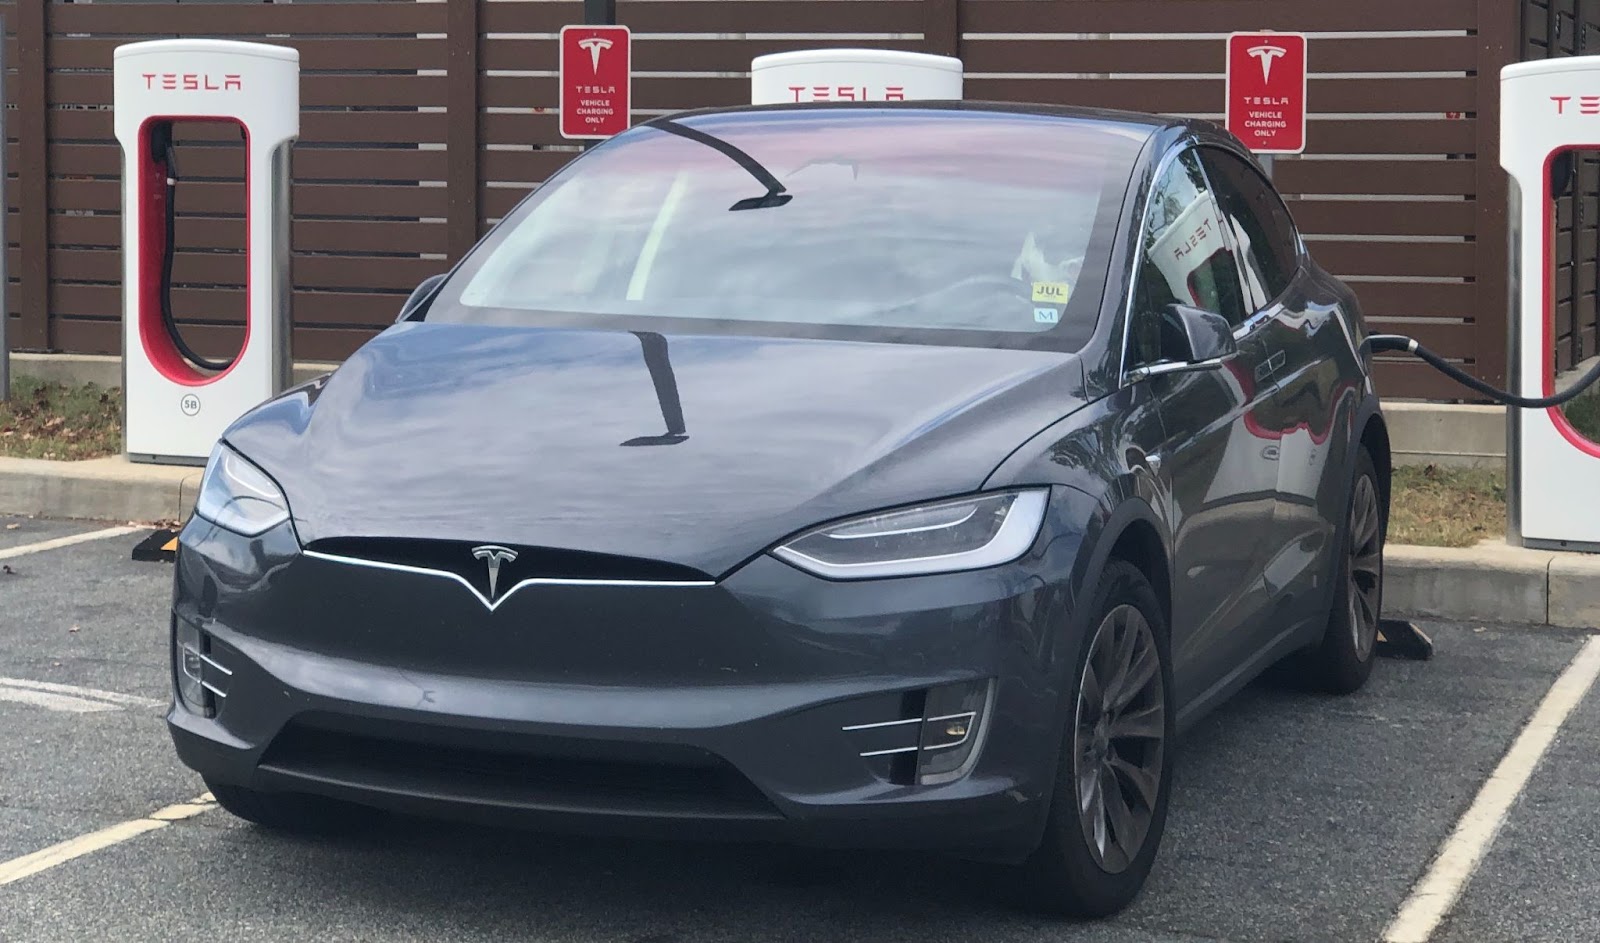 Tesla Model X charging at a Supercharger